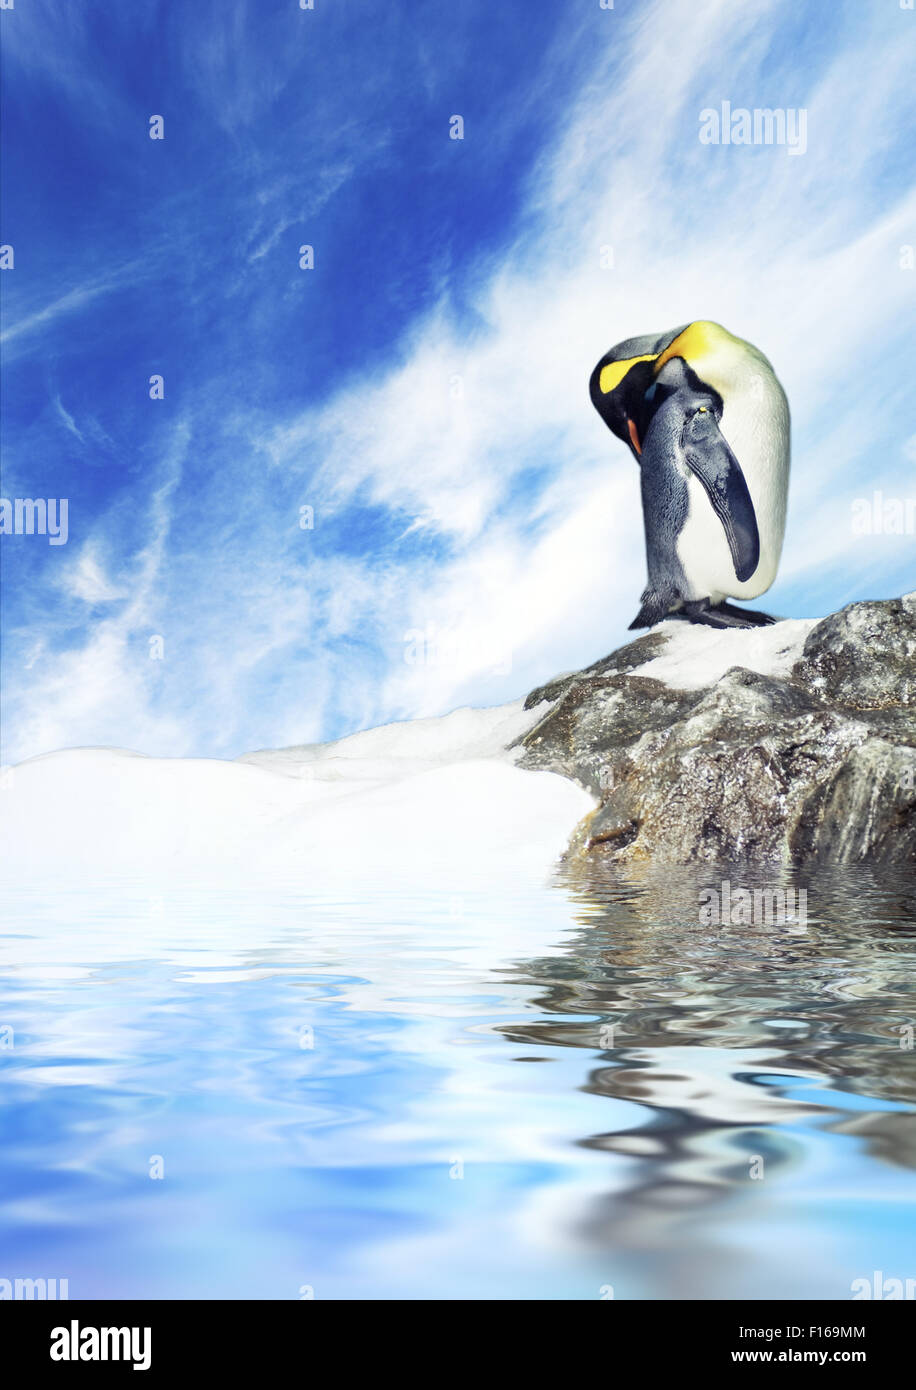 Imagen de un pingüino Foto de stock